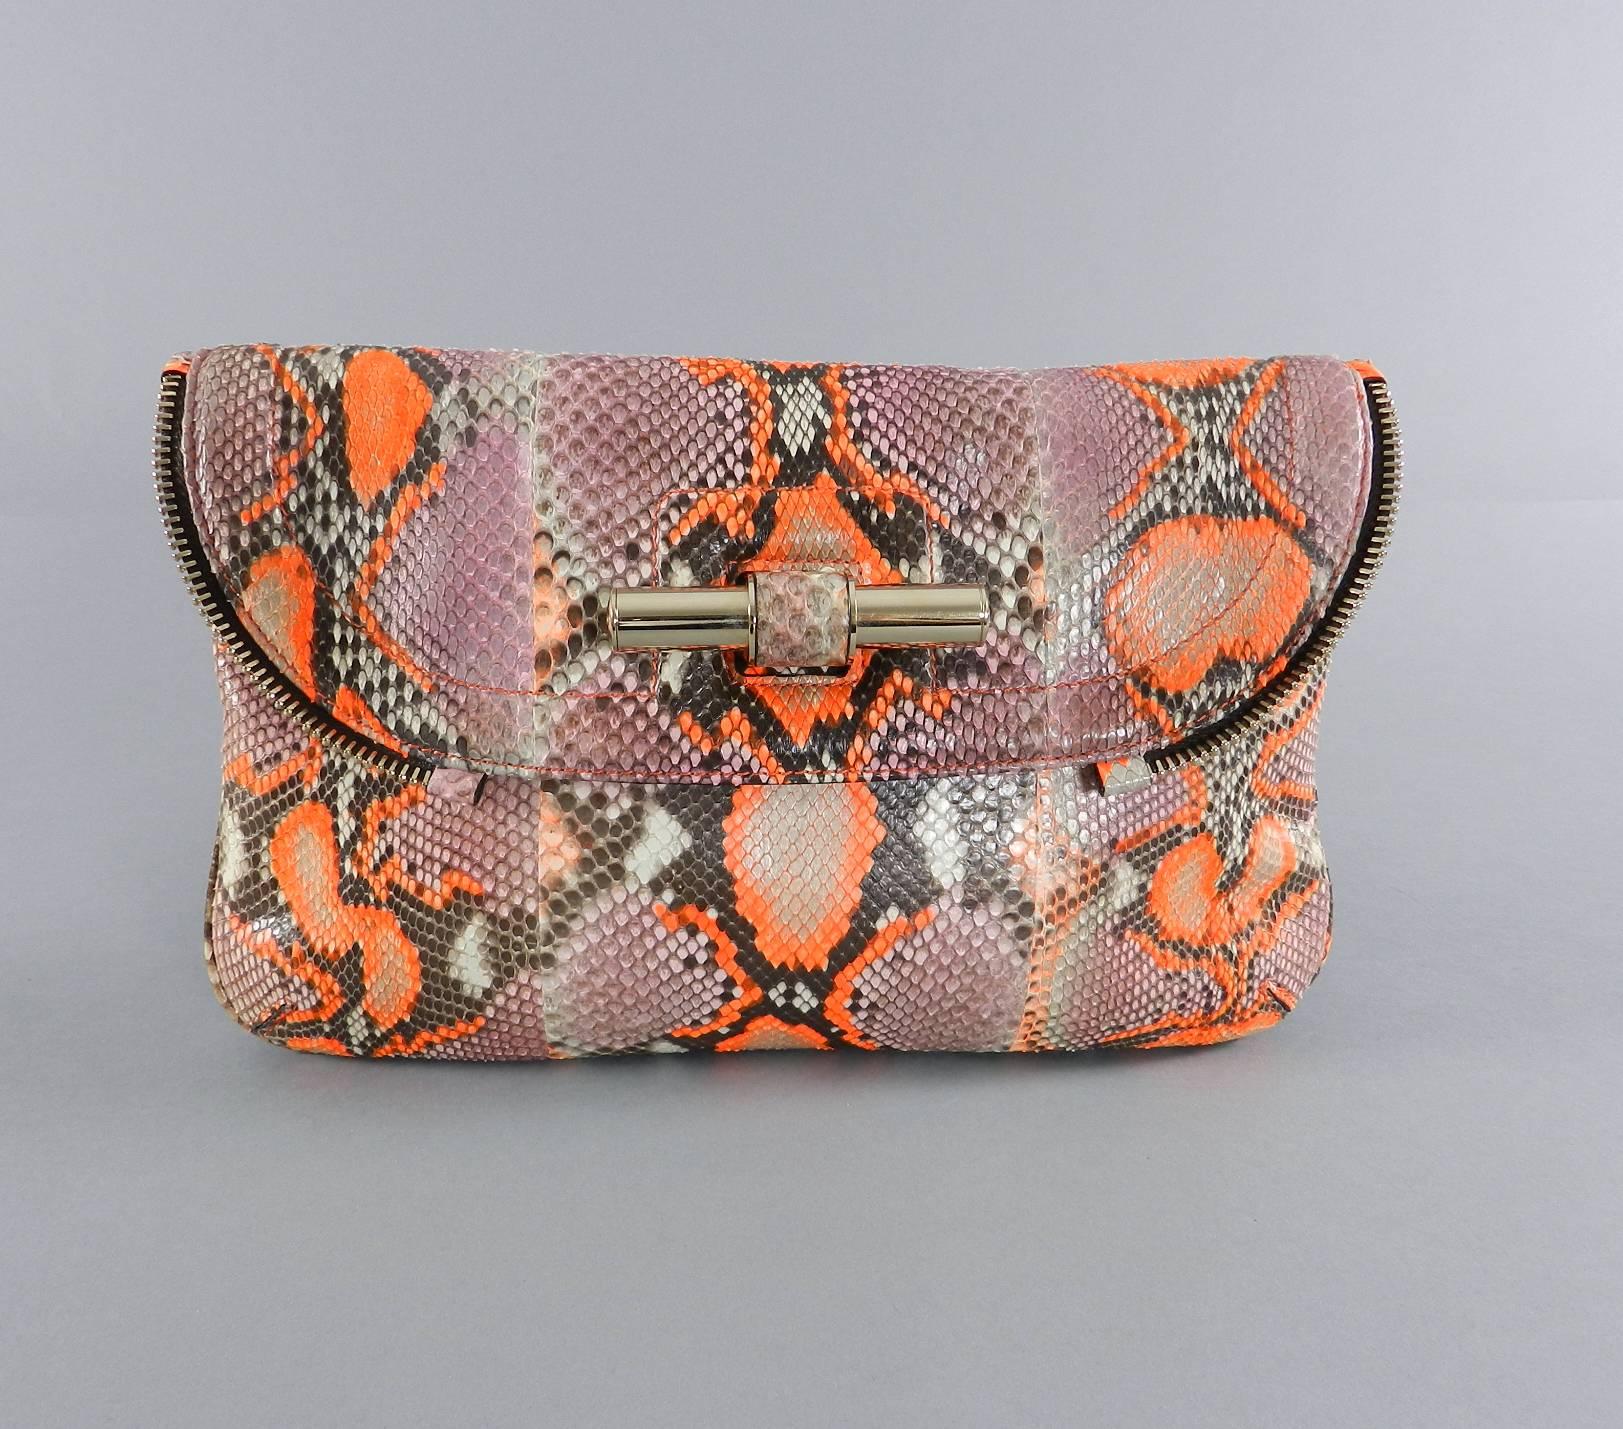 Women's Jimmy Choo Pink and Neon Orange Python Jasmine Clutch bag